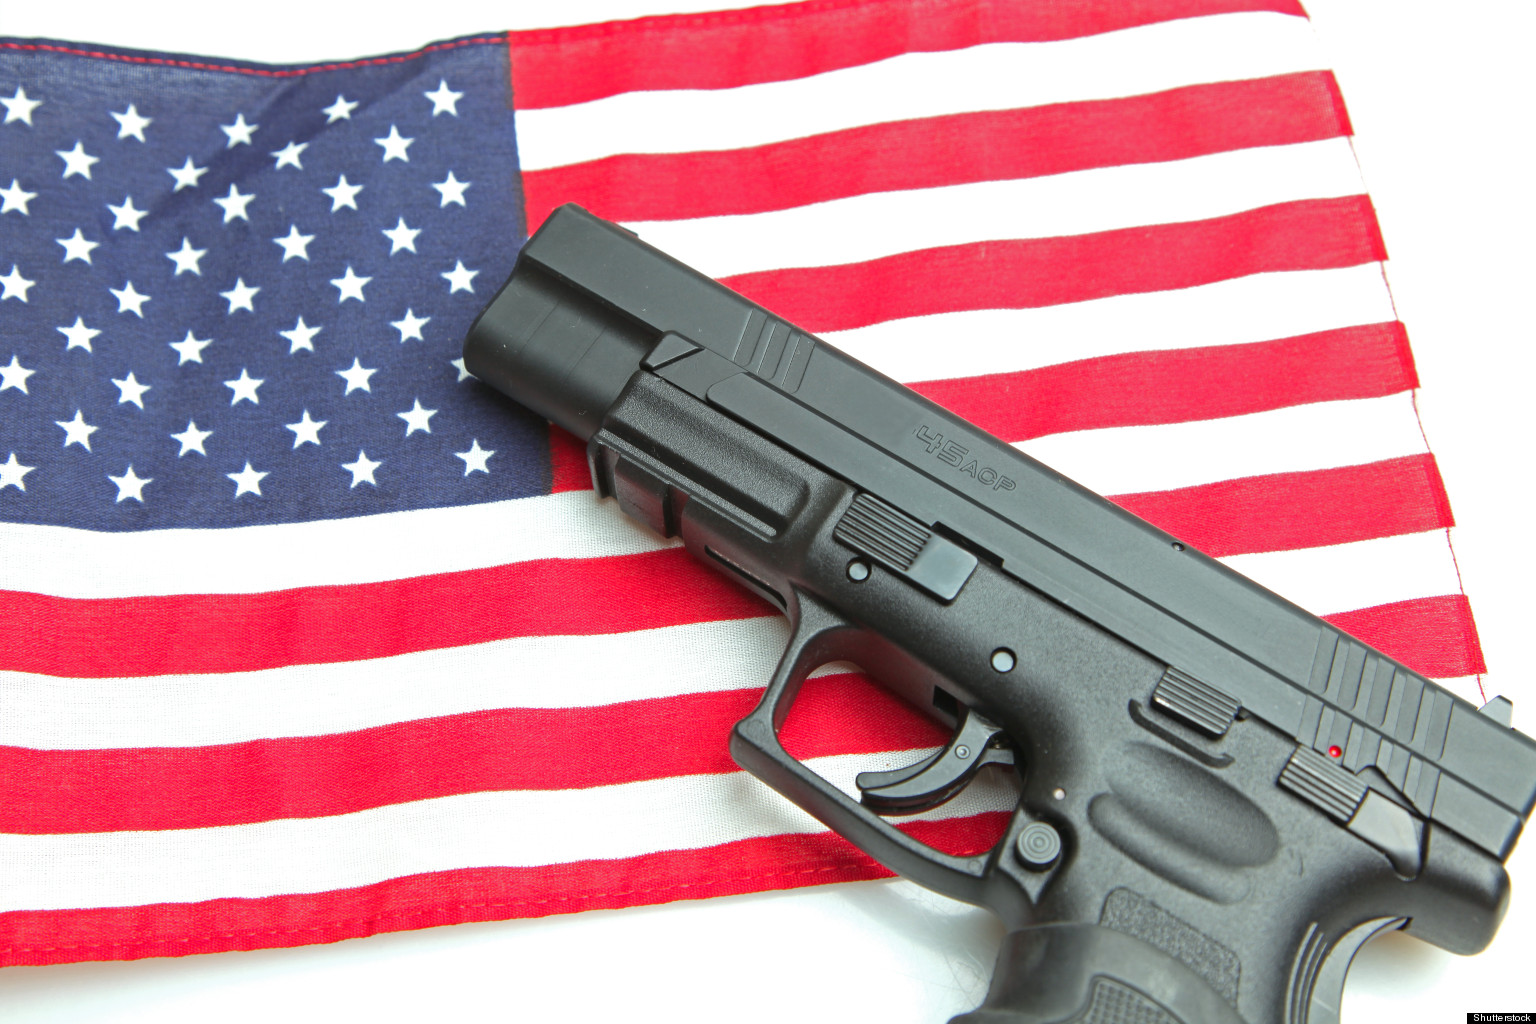  California promulga leyes sobre control de armas